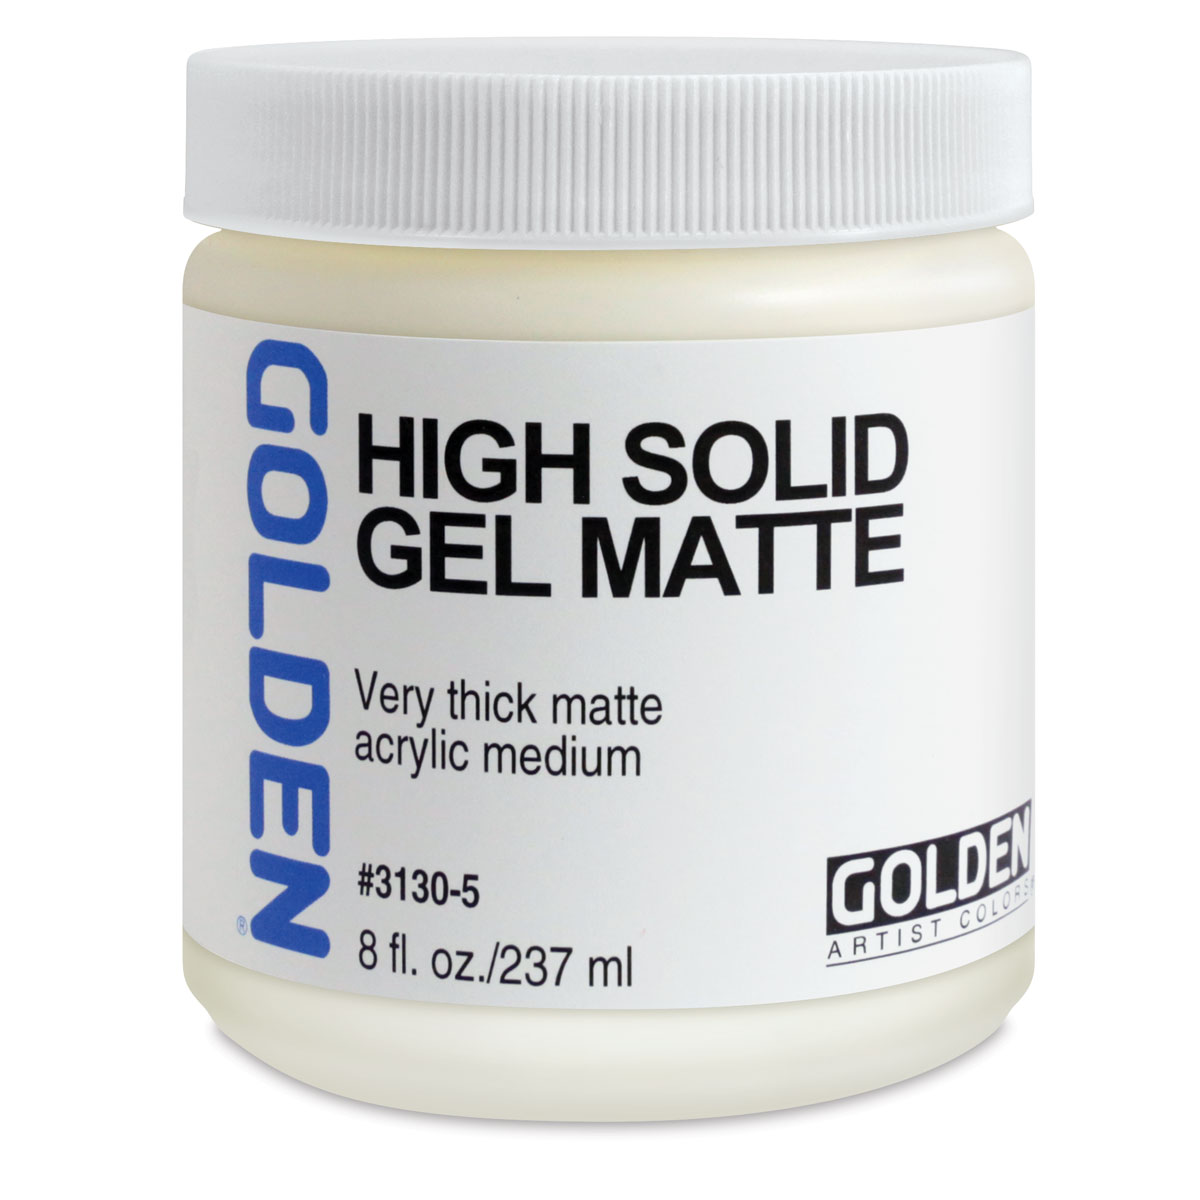 Golden High Solid Acrylic Gel Mediums